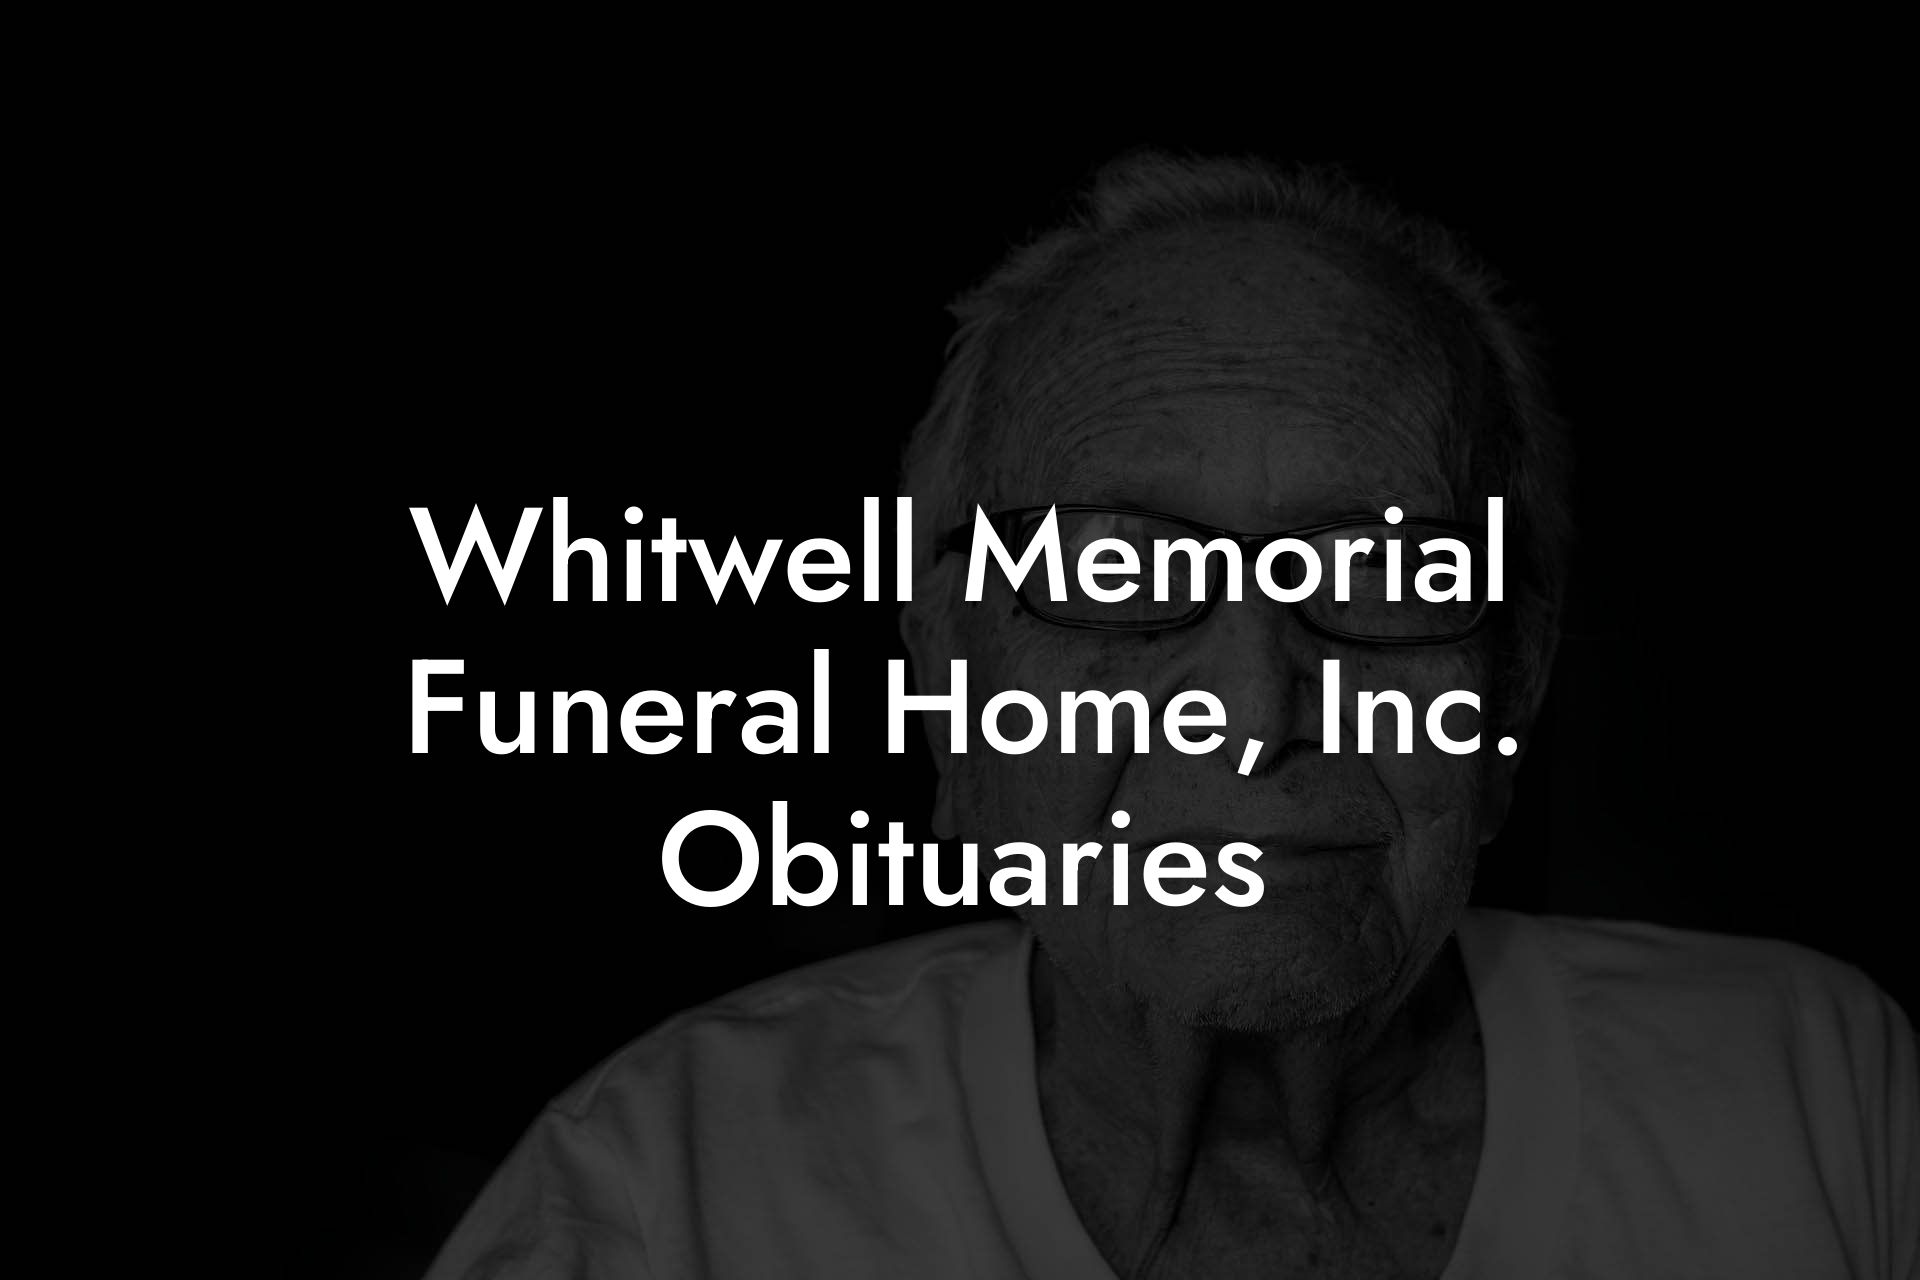 Whitwell Memorial Funeral Home, Inc. Obituaries